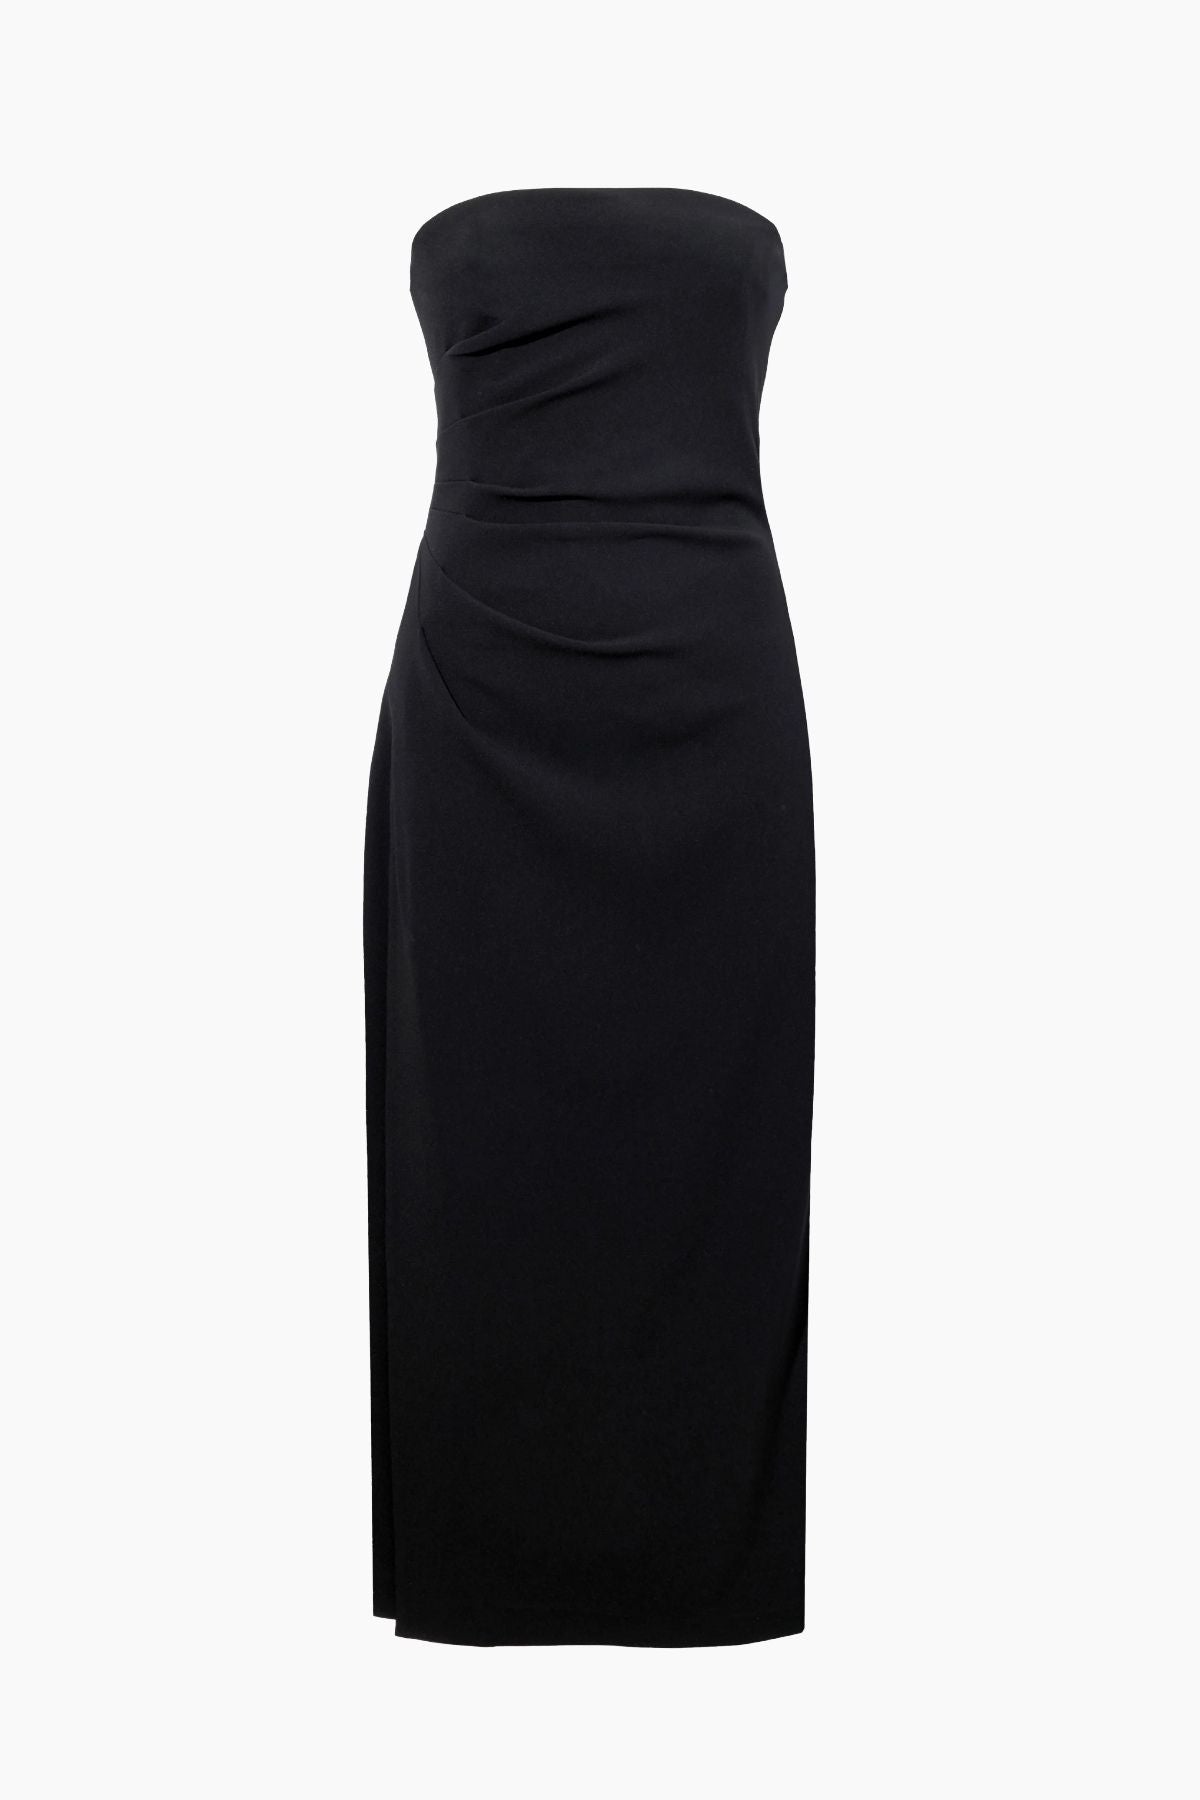 Proenza Schouler Shira Strapless Dress - Black